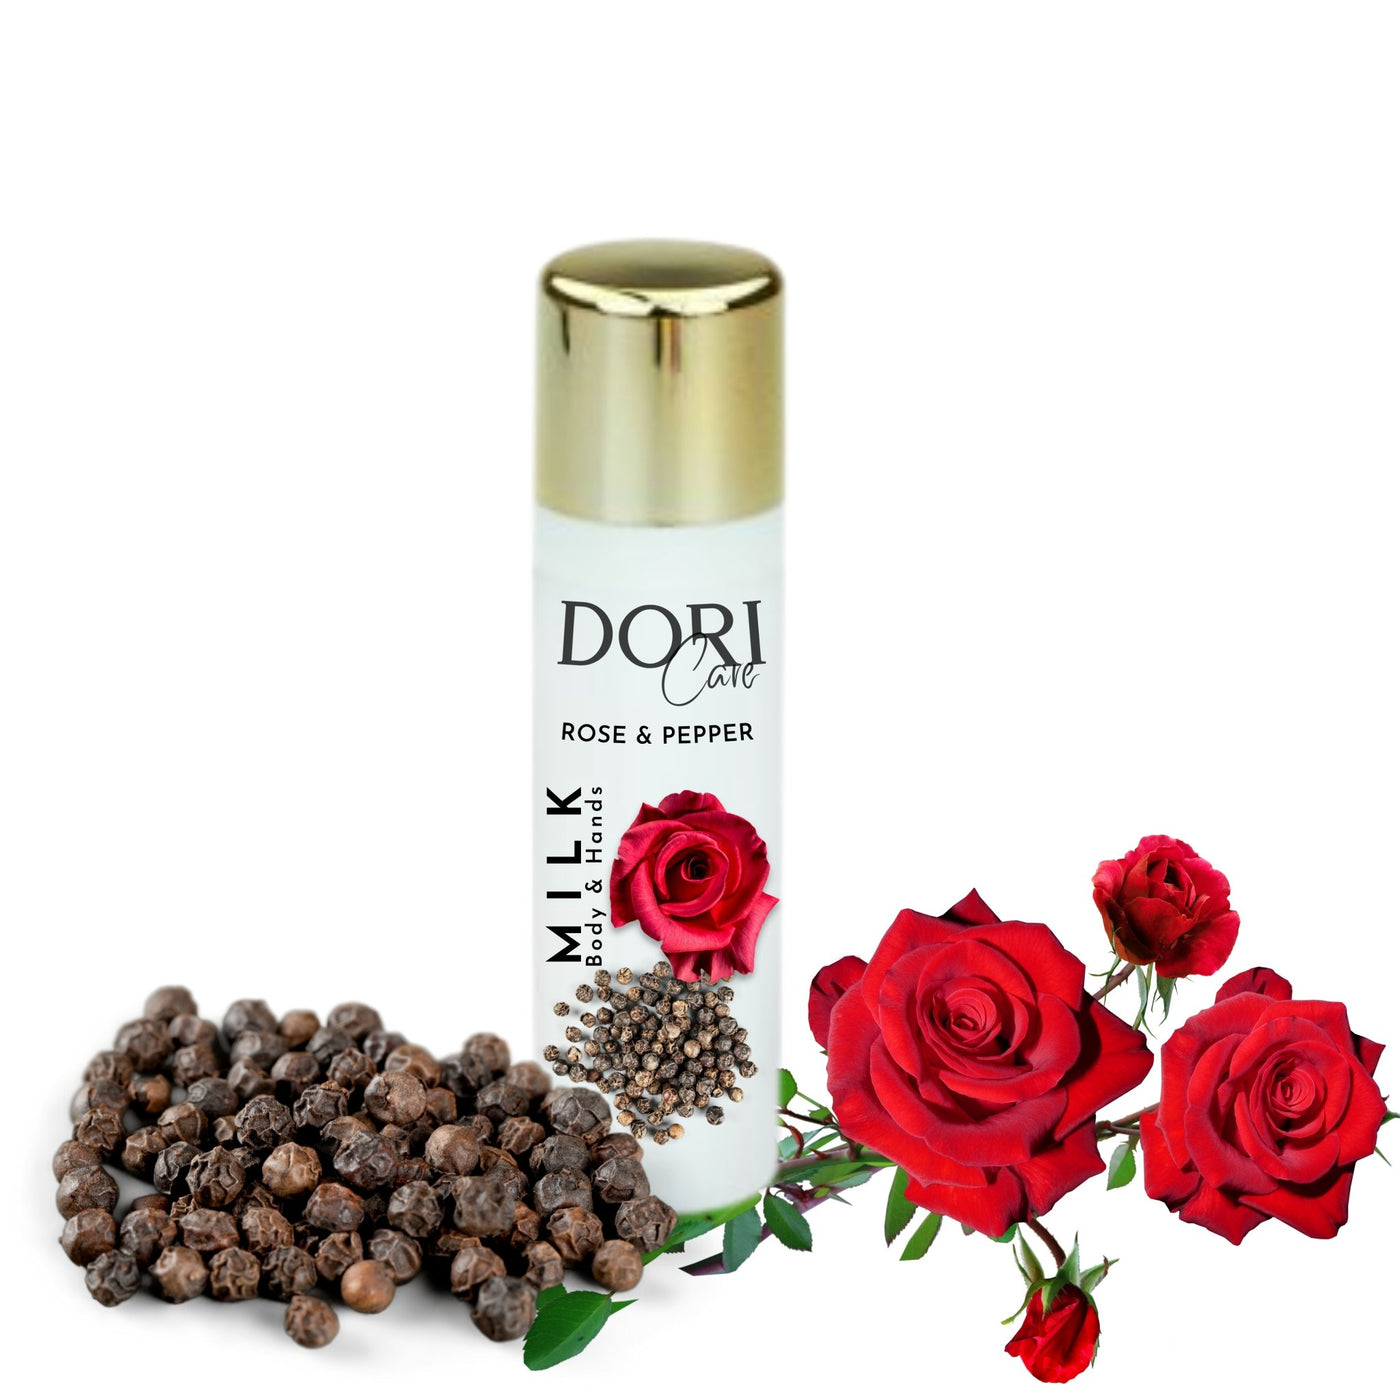 DORI Care - MILK Body & Hands - Rose & Pepper - Doriana Cosmetics GmbH